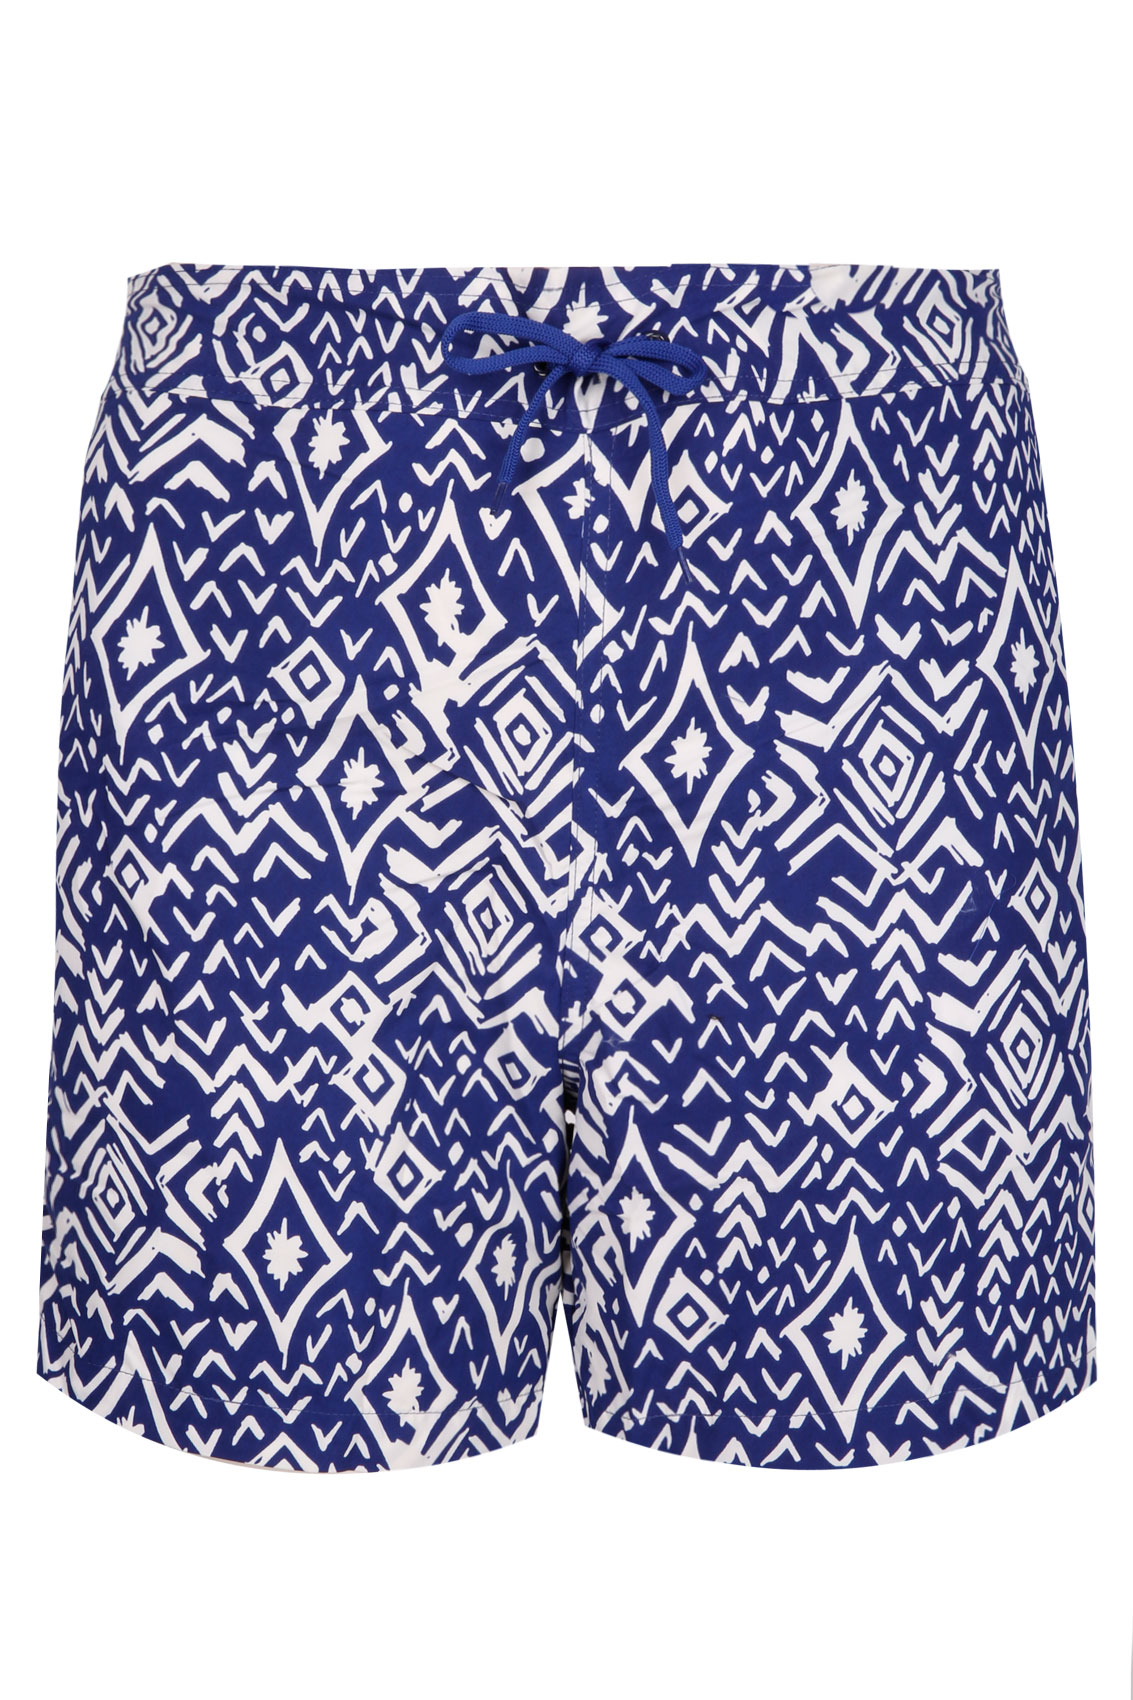 Blue & White Aztec Print Board Shorts With Drawstring Waist Plus Size ...